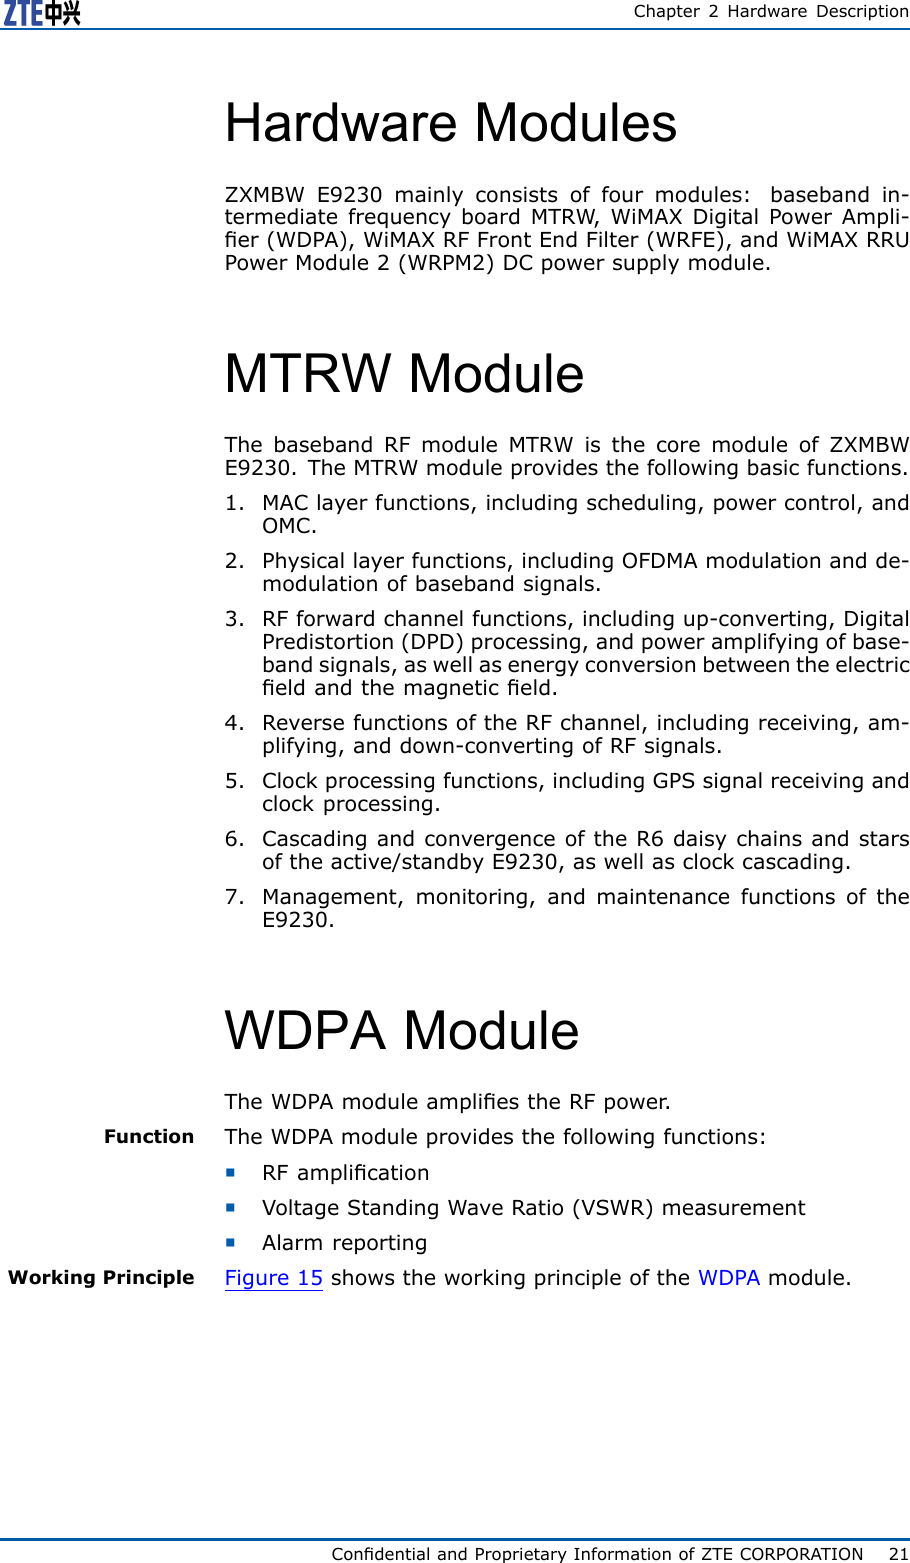 Chapter2HardwareDescriptionHardwareModulesZXMBWE9230mainlyconsistsoffourmodules:basebandin-termediatefrequencyboardMTRW ,WiMAXDigitalPowerAmpli-er(WDPA),WiMAXRFFrontEndFilter(WRFE),andWiMAXRRUPowerModule2(WRPM2)DCpowersupplymodule.MTRWModuleThebasebandRFmoduleMTRWisthecoremoduleofZXMBWE9230.TheMTRWmoduleprovidesthefollowingbasicfunctions.1.MAClayerfunctions,includingscheduling,powercontrol,andOMC.2.Physicallayerfunctions,includingOFDMAmodulationandde-modulationofbasebandsignals.3.RFforwardchannelfunctions,includingup-converting,DigitalPredistortion(DPD)processing,andpoweramplifyingofbase-bandsignals,aswellasenergyconversionbetweentheelectriceldandthemagneticeld.4.ReversefunctionsoftheRFchannel,includingreceiving,am-plifying,anddown-convertingofRFsignals.5.Clockprocessingfunctions,includingGPSsignalreceivingandclockprocessing.6.CascadingandconvergenceoftheR6daisychainsandstarsoftheactive/standbyE9230,aswellasclockcascading.7.Management,monitoring,andmaintenancefunctionsoftheE9230.WDPAModuleTheWDPAmoduleampliestheRFpower .FunctionTheWDPAmoduleprovidesthefollowingfunctions:�RFamplication�VoltageStandingWaveRatio(VSWR)measurement�AlarmreportingWorkingPrincipleFigure15showstheworkingprincipleoftheWDPAmodule.CondentialandProprietaryInformationofZTECORPORATION21